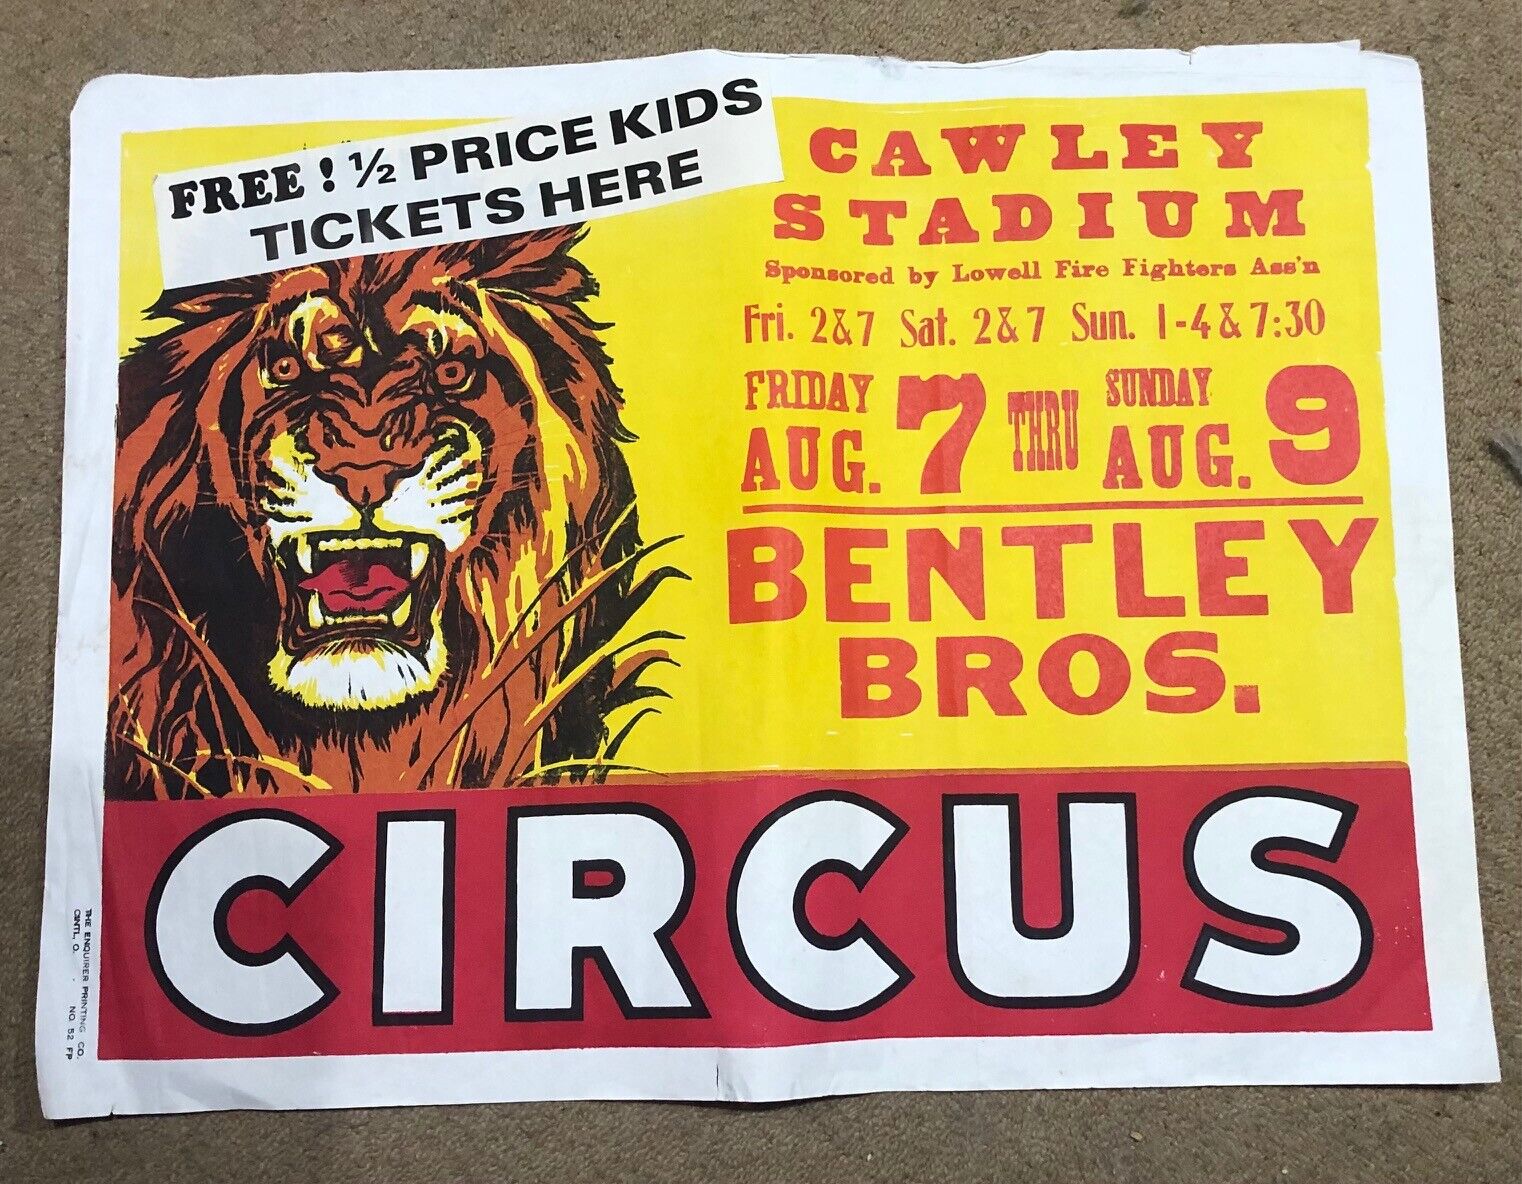 1952 Bentley Bros. Circus Tiger Cawley Stadium Massachusetts Silk Screen Poster